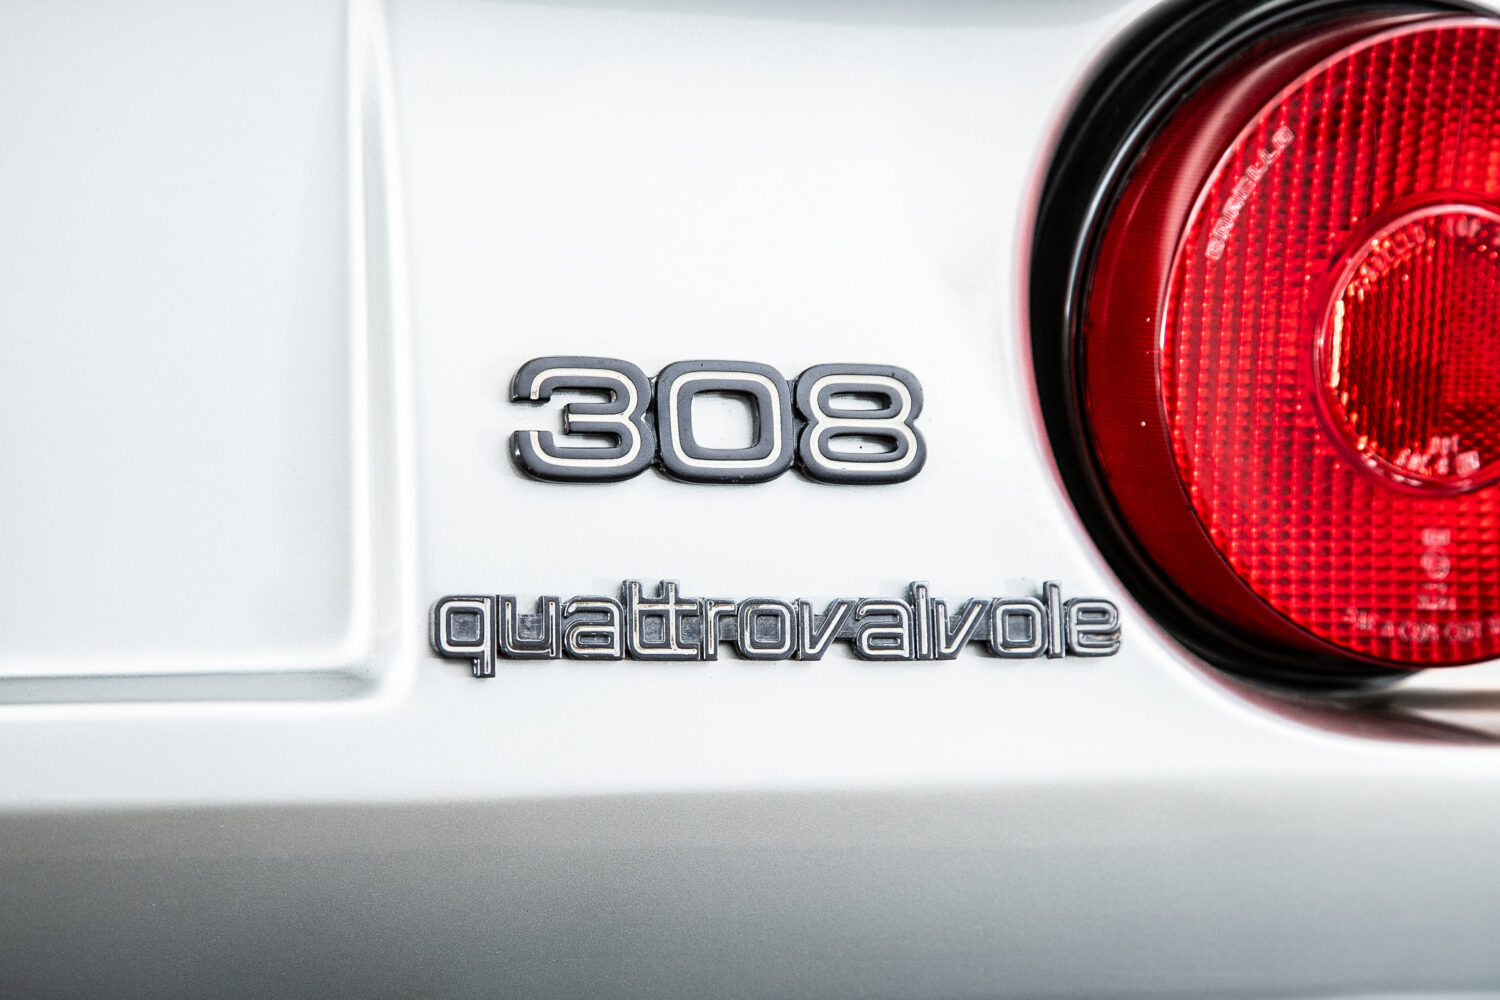 308 GTB クワトロバルボーレ